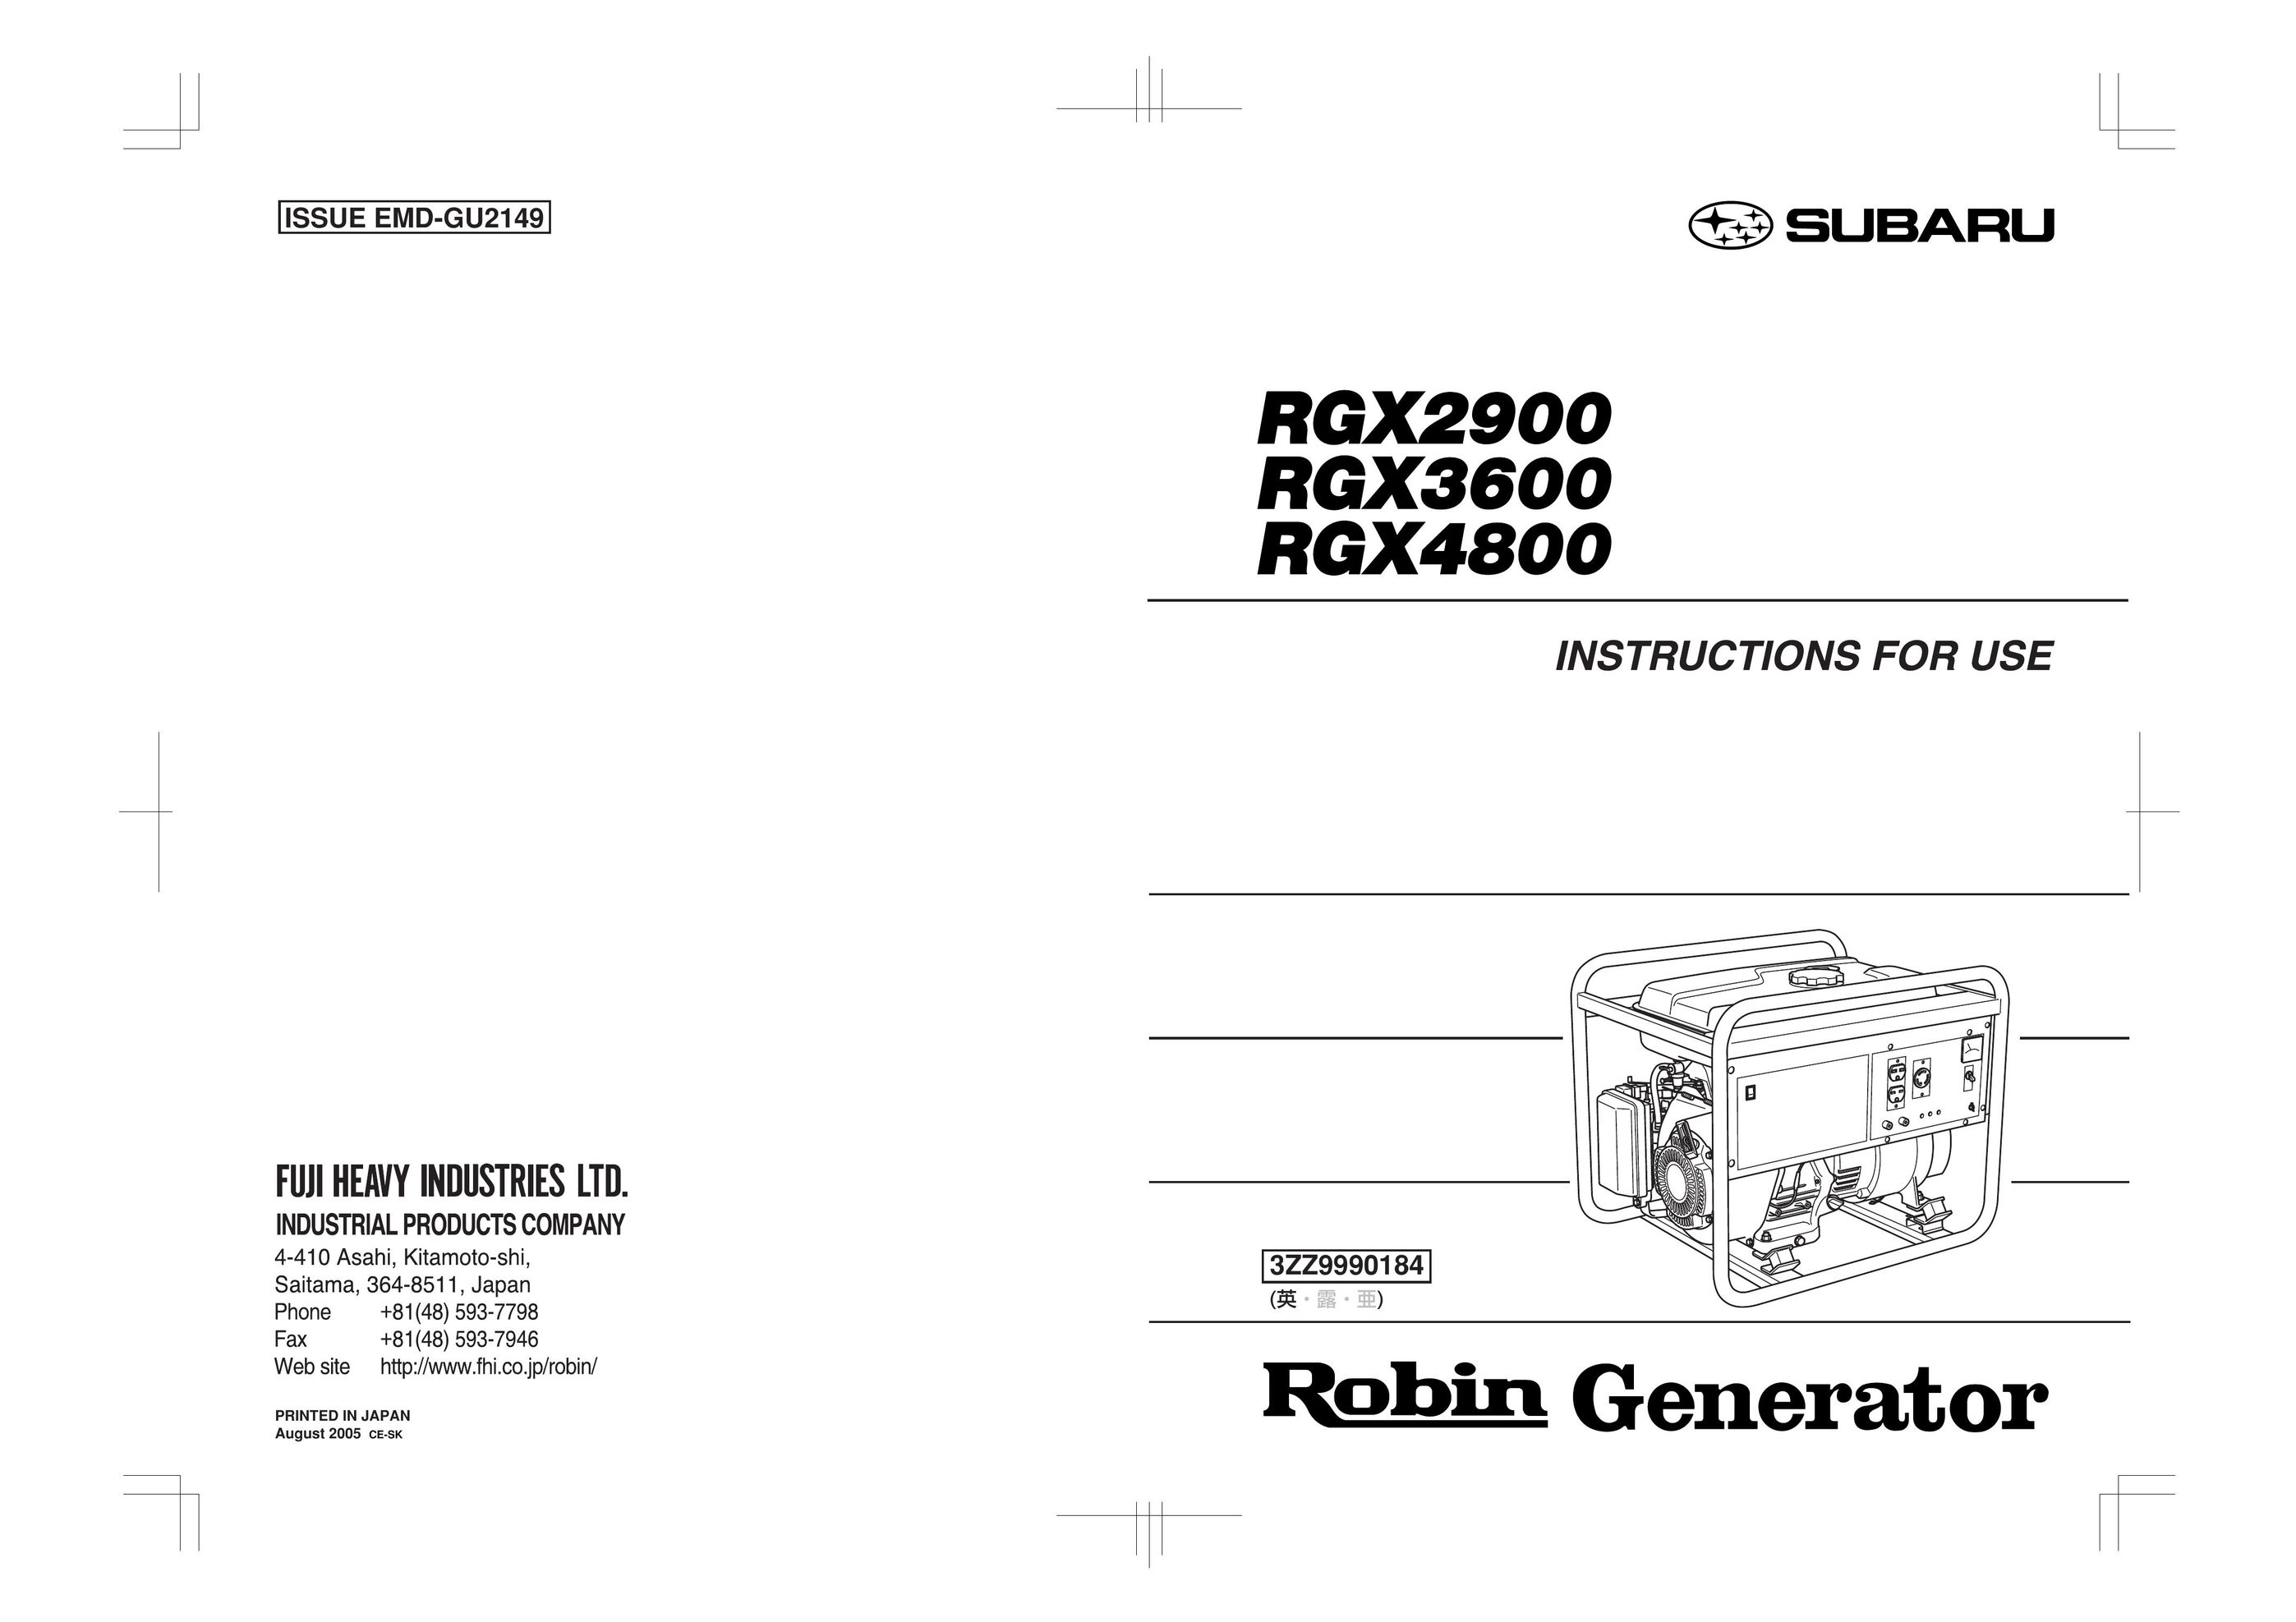 Subaru Robin Power Products RGX3600 Laptop User Manual